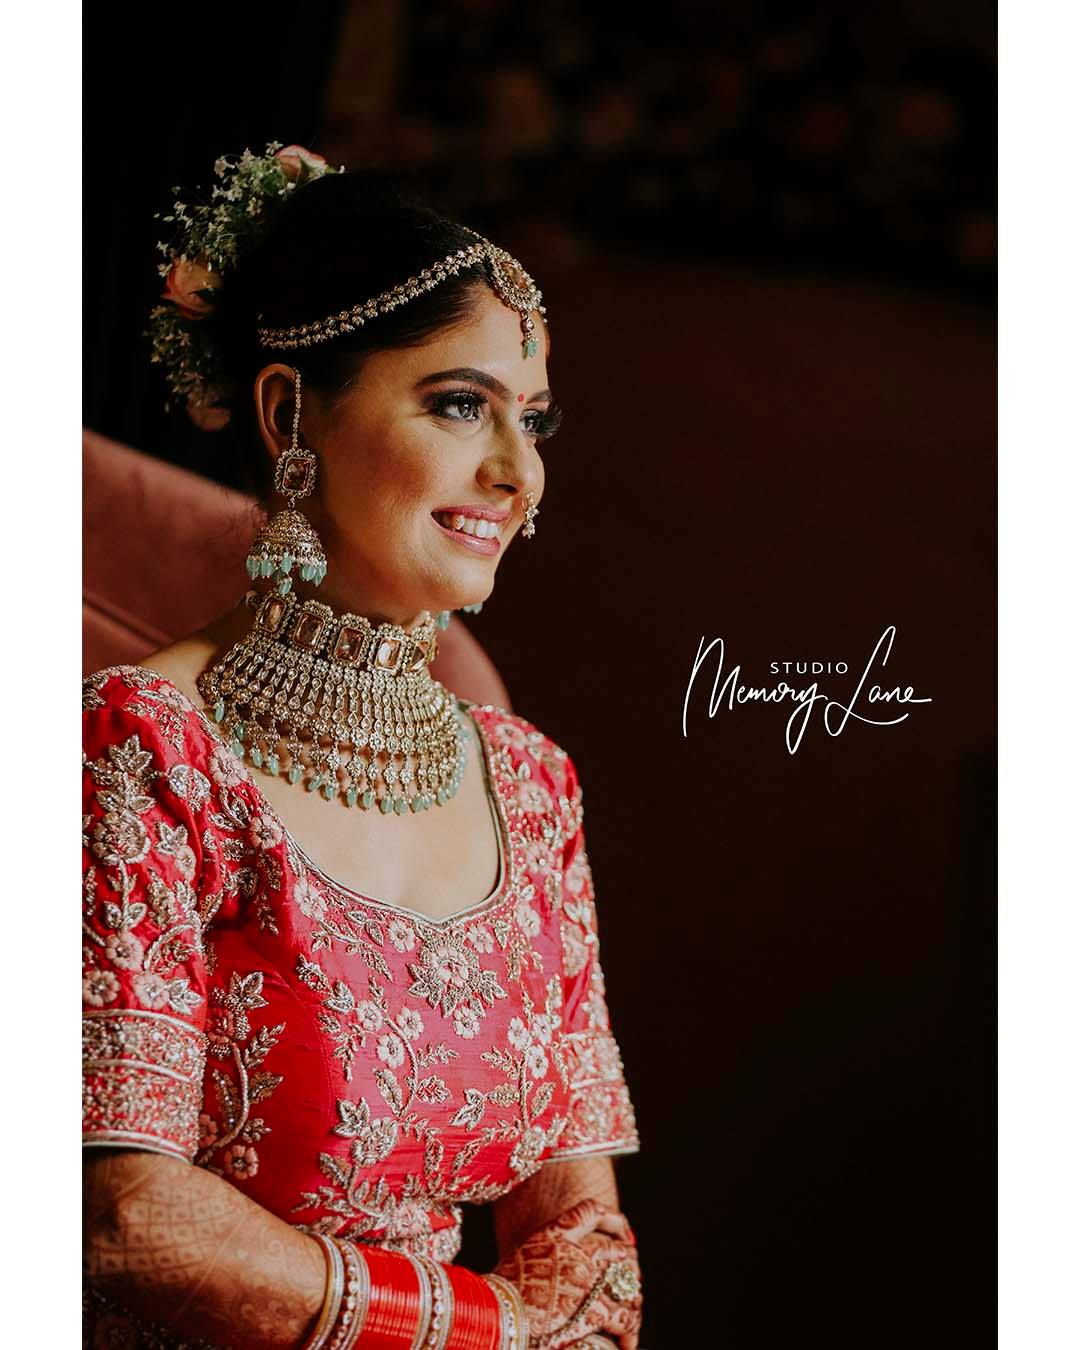 Professional wedding photographers in Punjab | Eyes speak volumes!